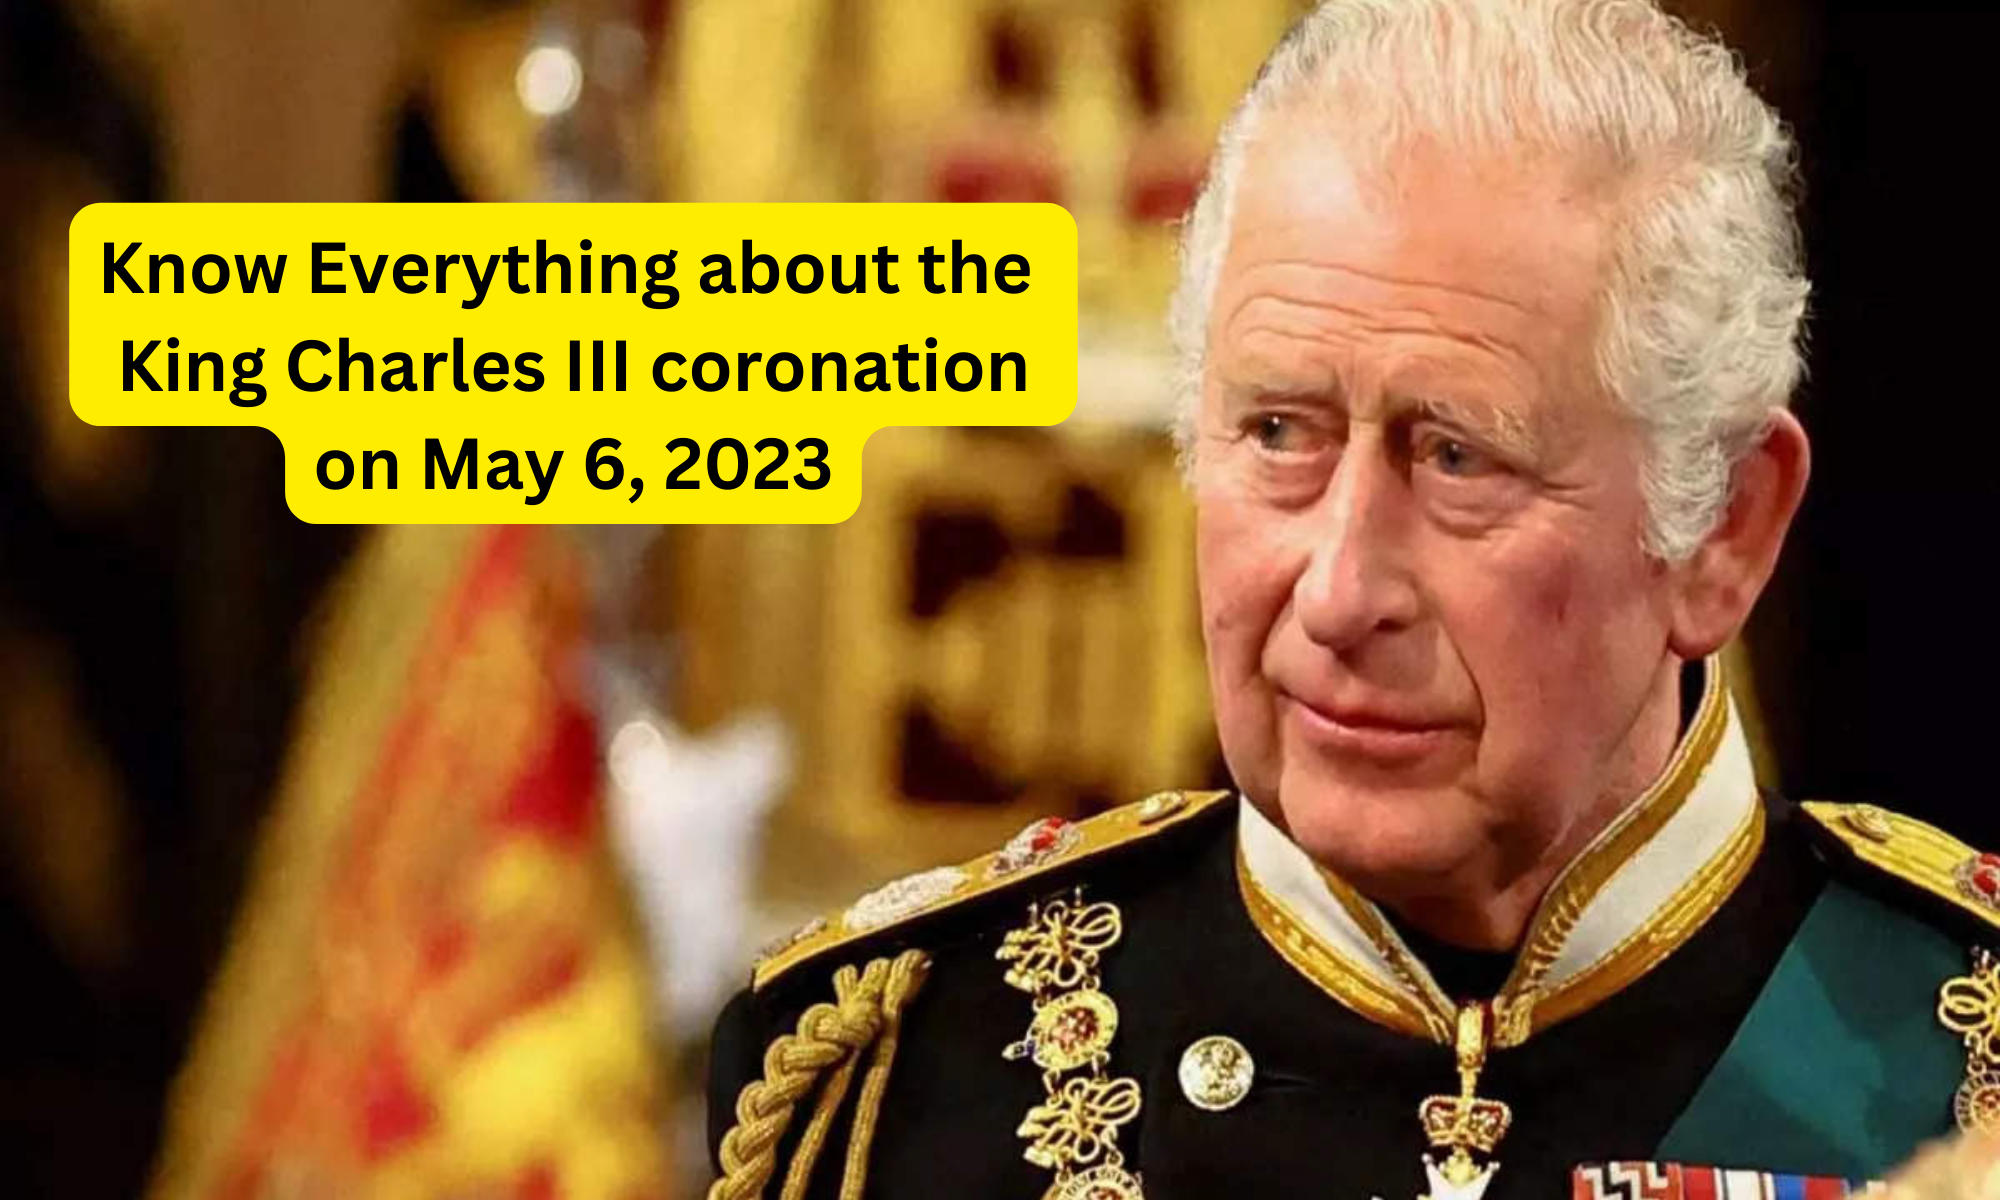 King Charles III coronation: Know Everything about the King Charles III coronation_40.1